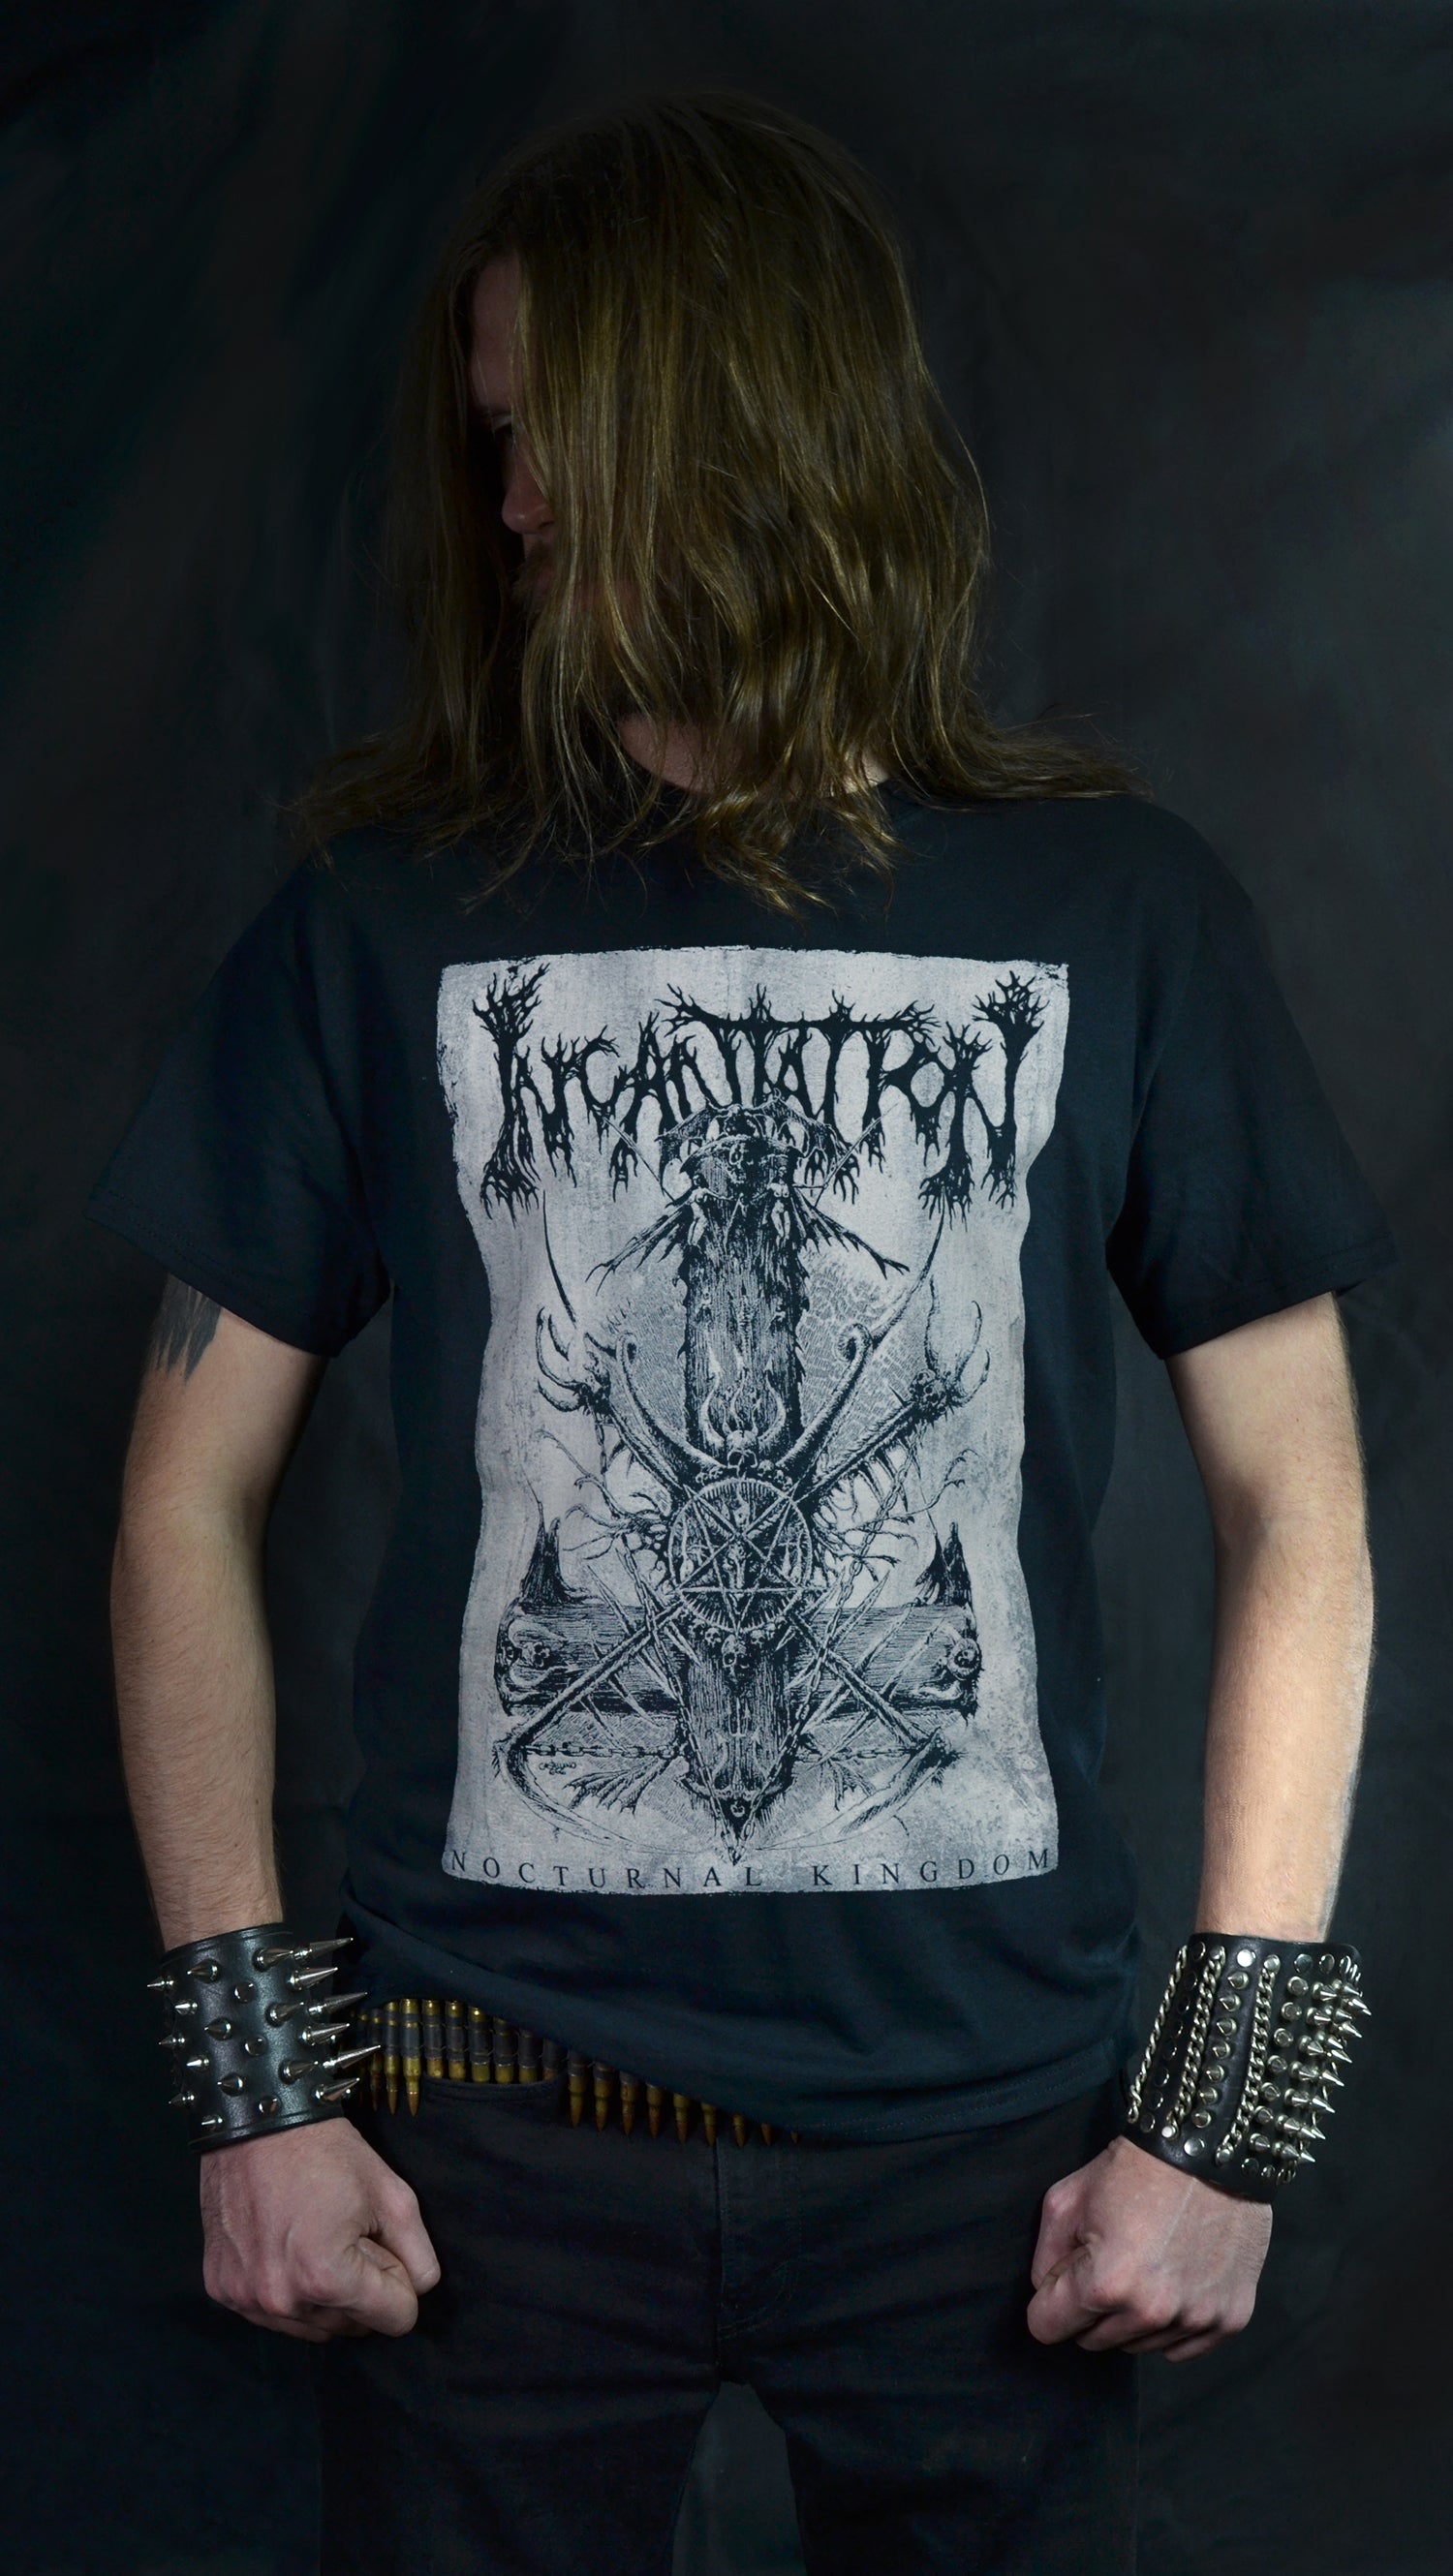 INCANTATION - Nocturnal Kingdom (T-Shirt)